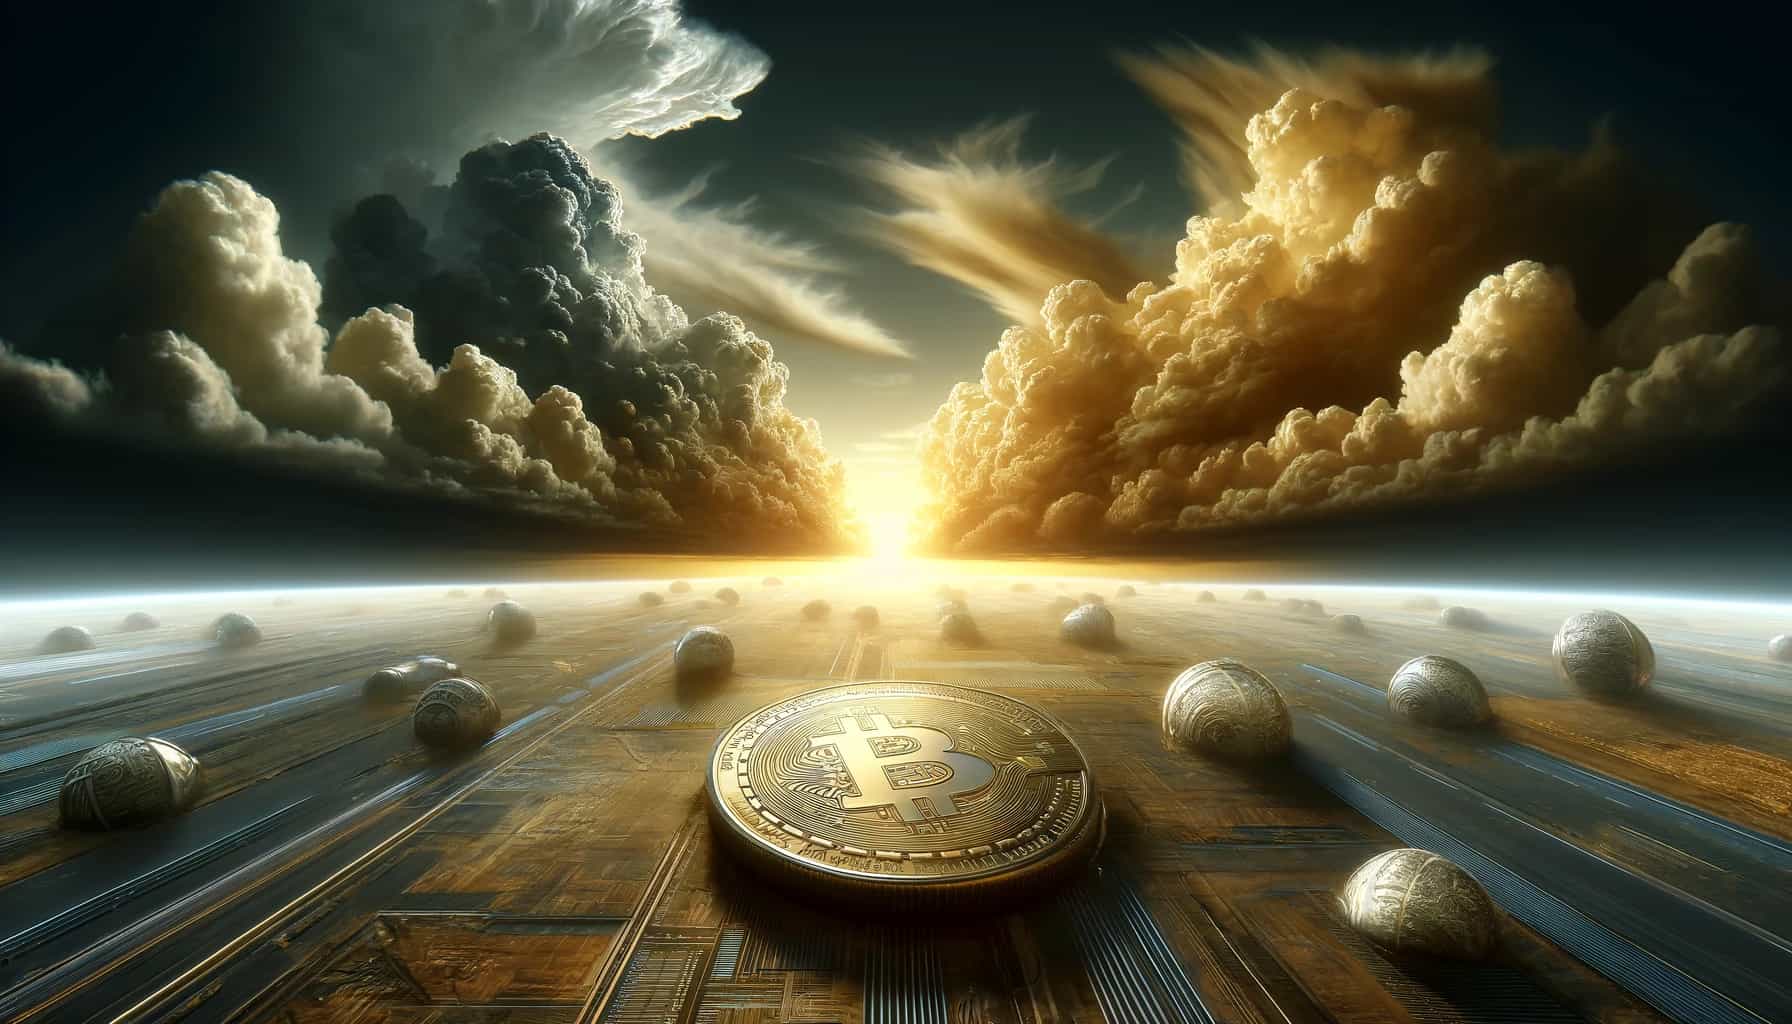 bitcoin clouds on the horizon